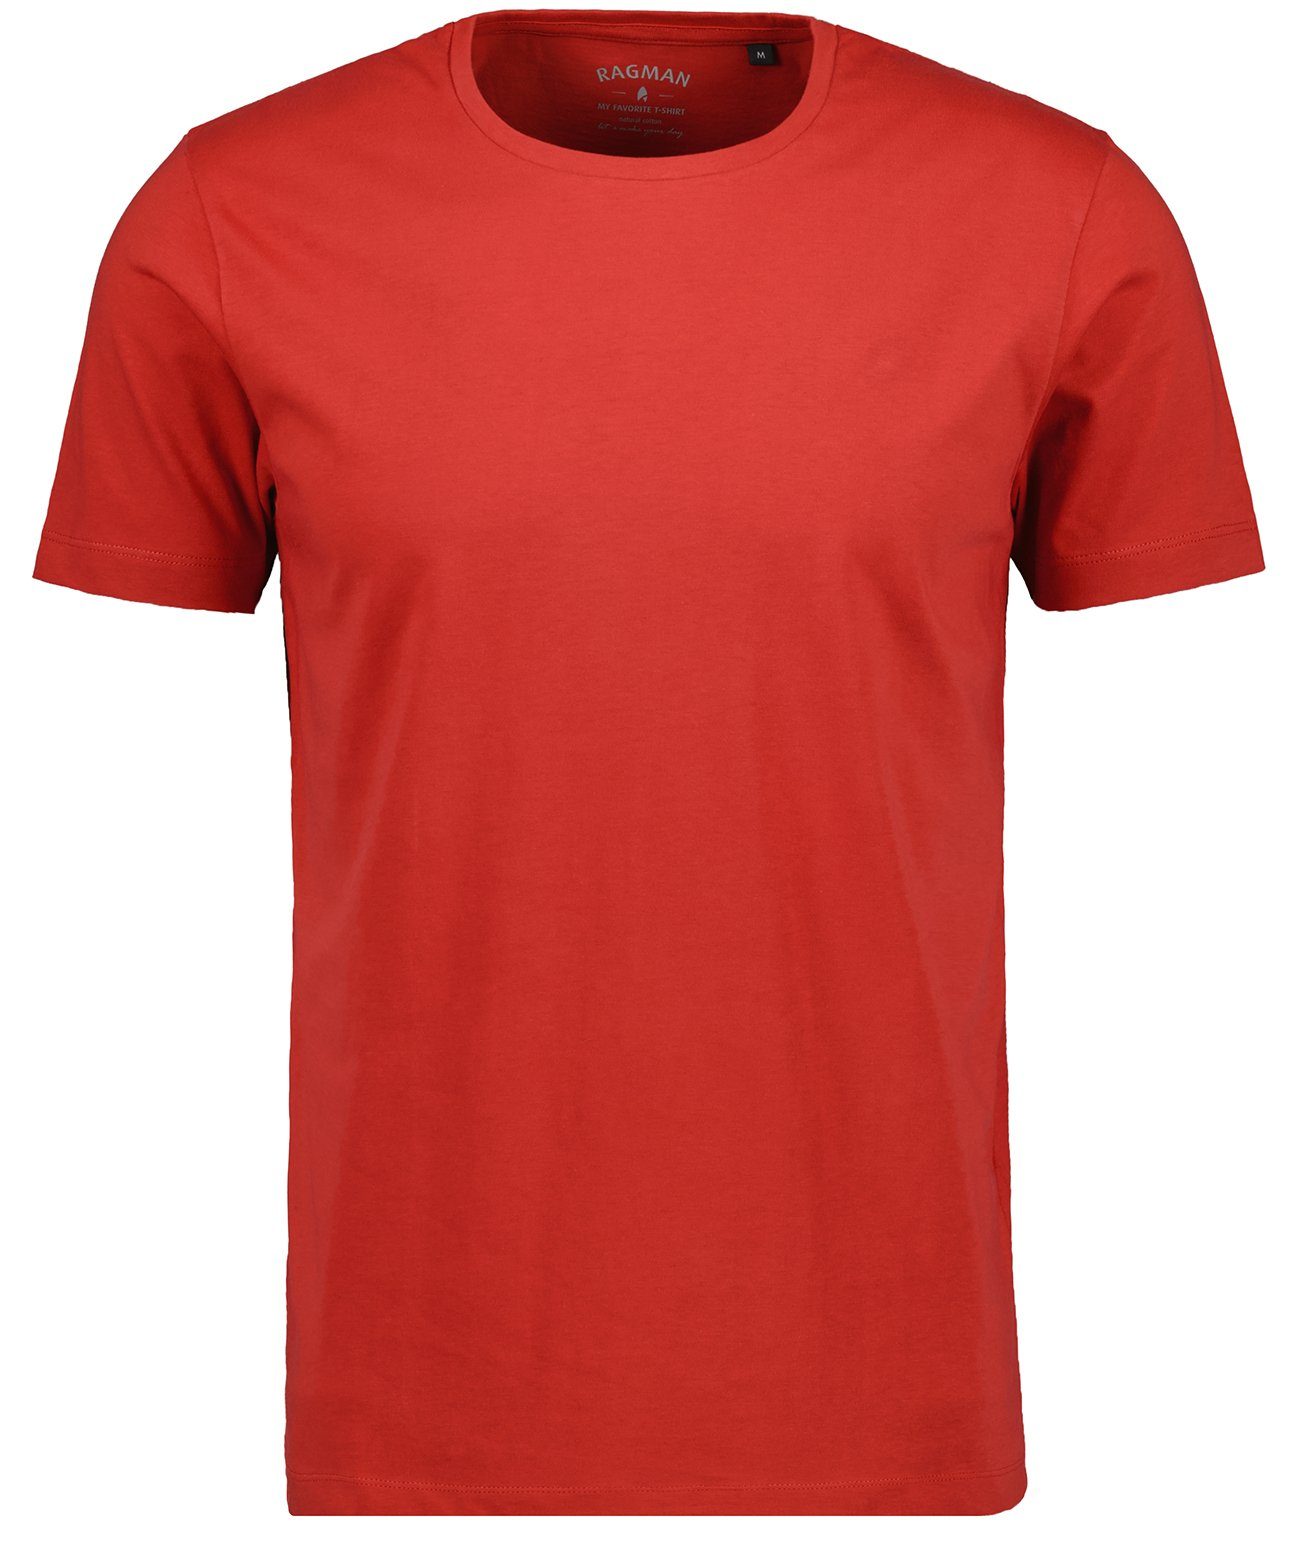 RAGMAN T-Shirt Weinrot-615